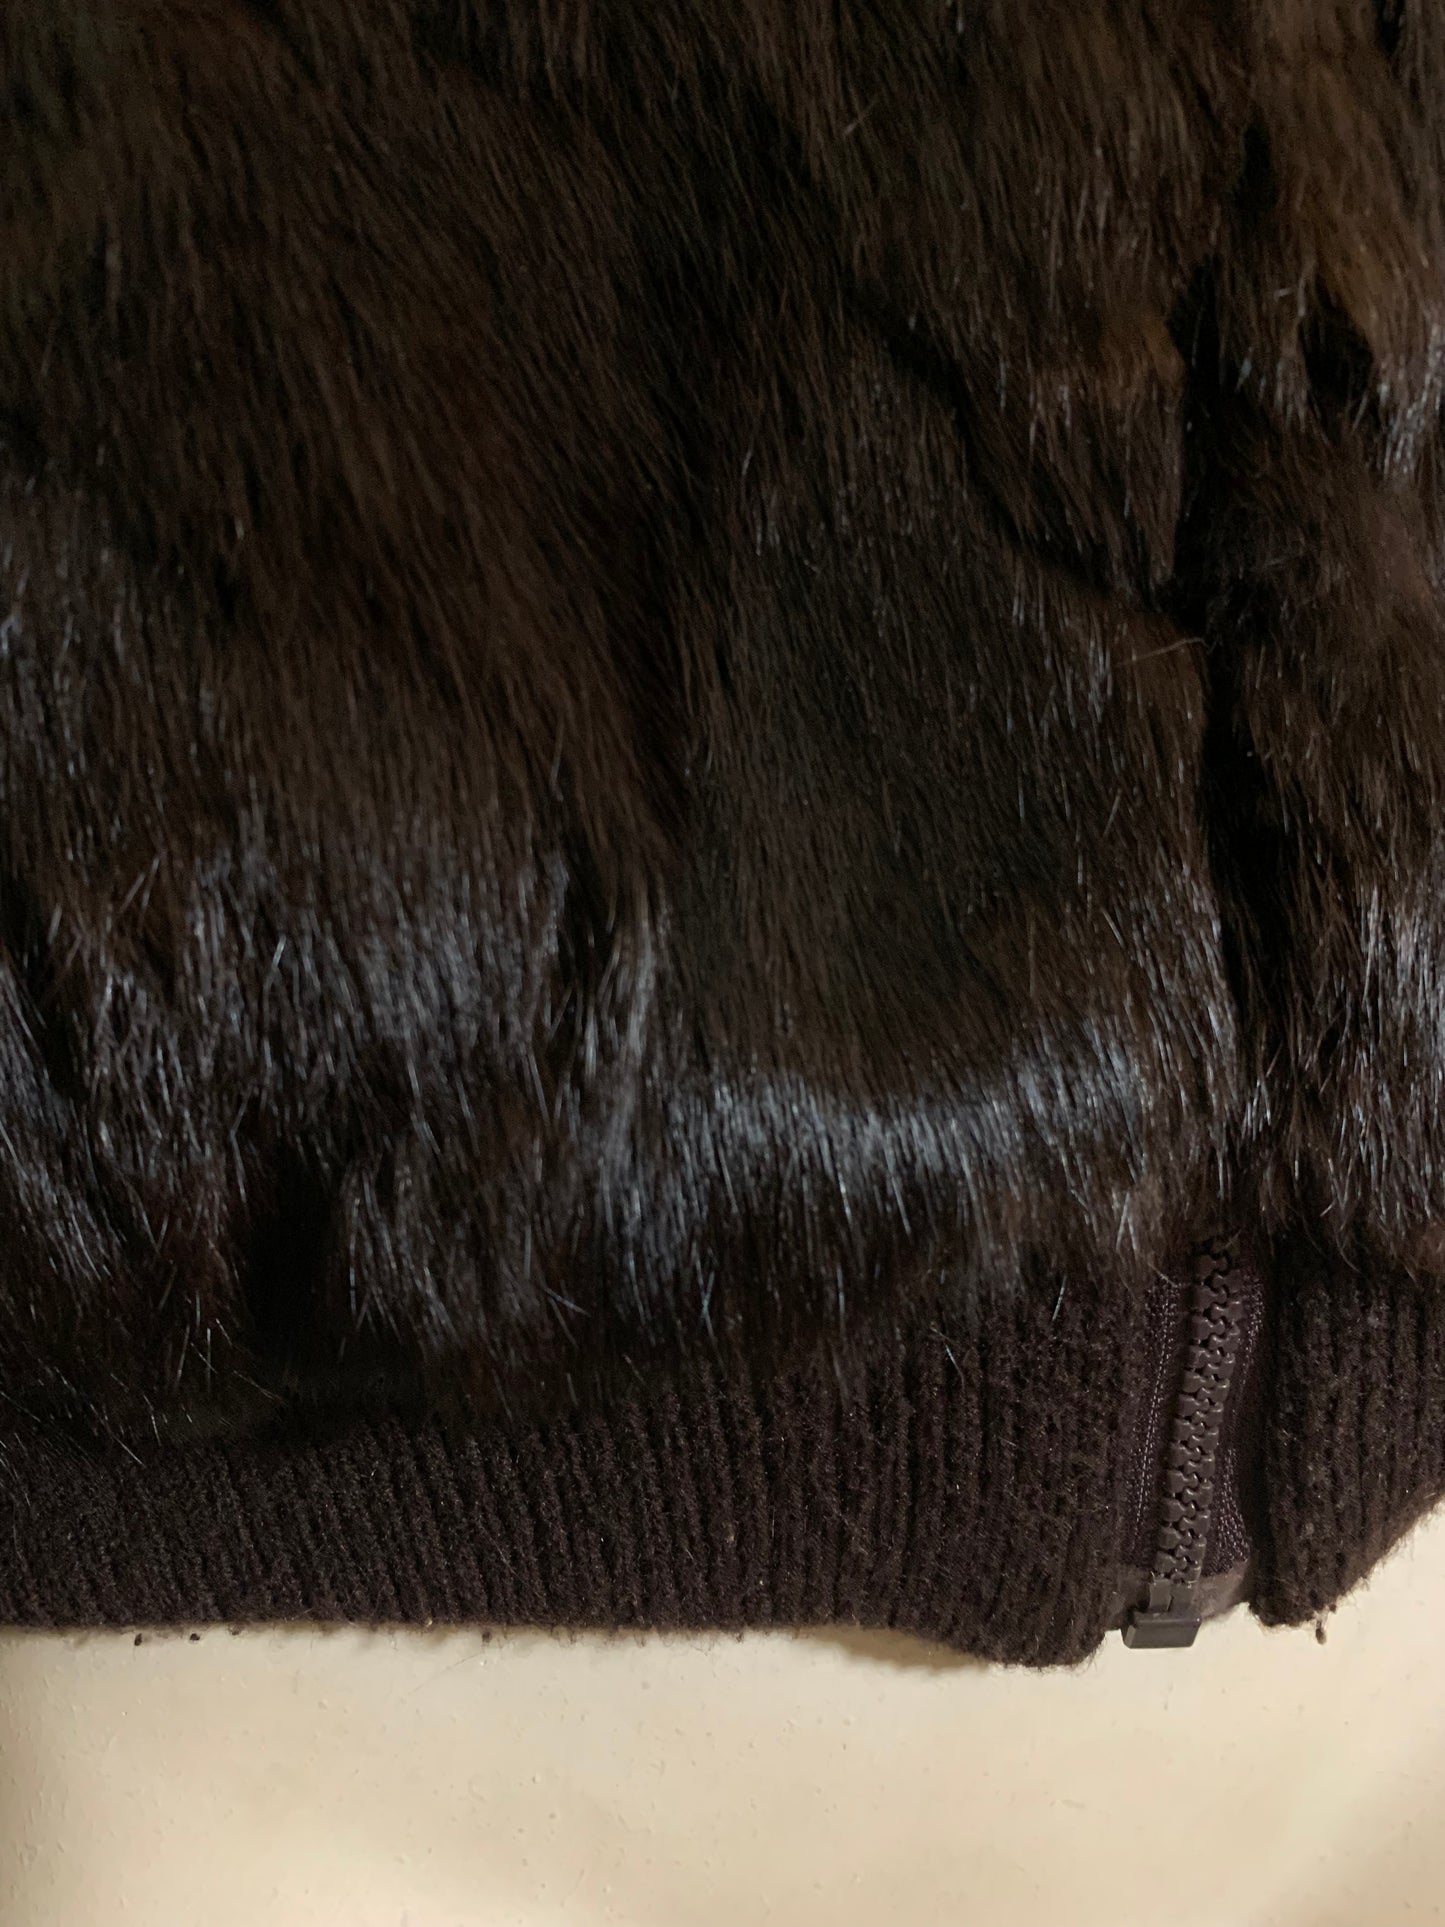 Glossy Deep Brown Rabbit Fur Jacket circa 1980s